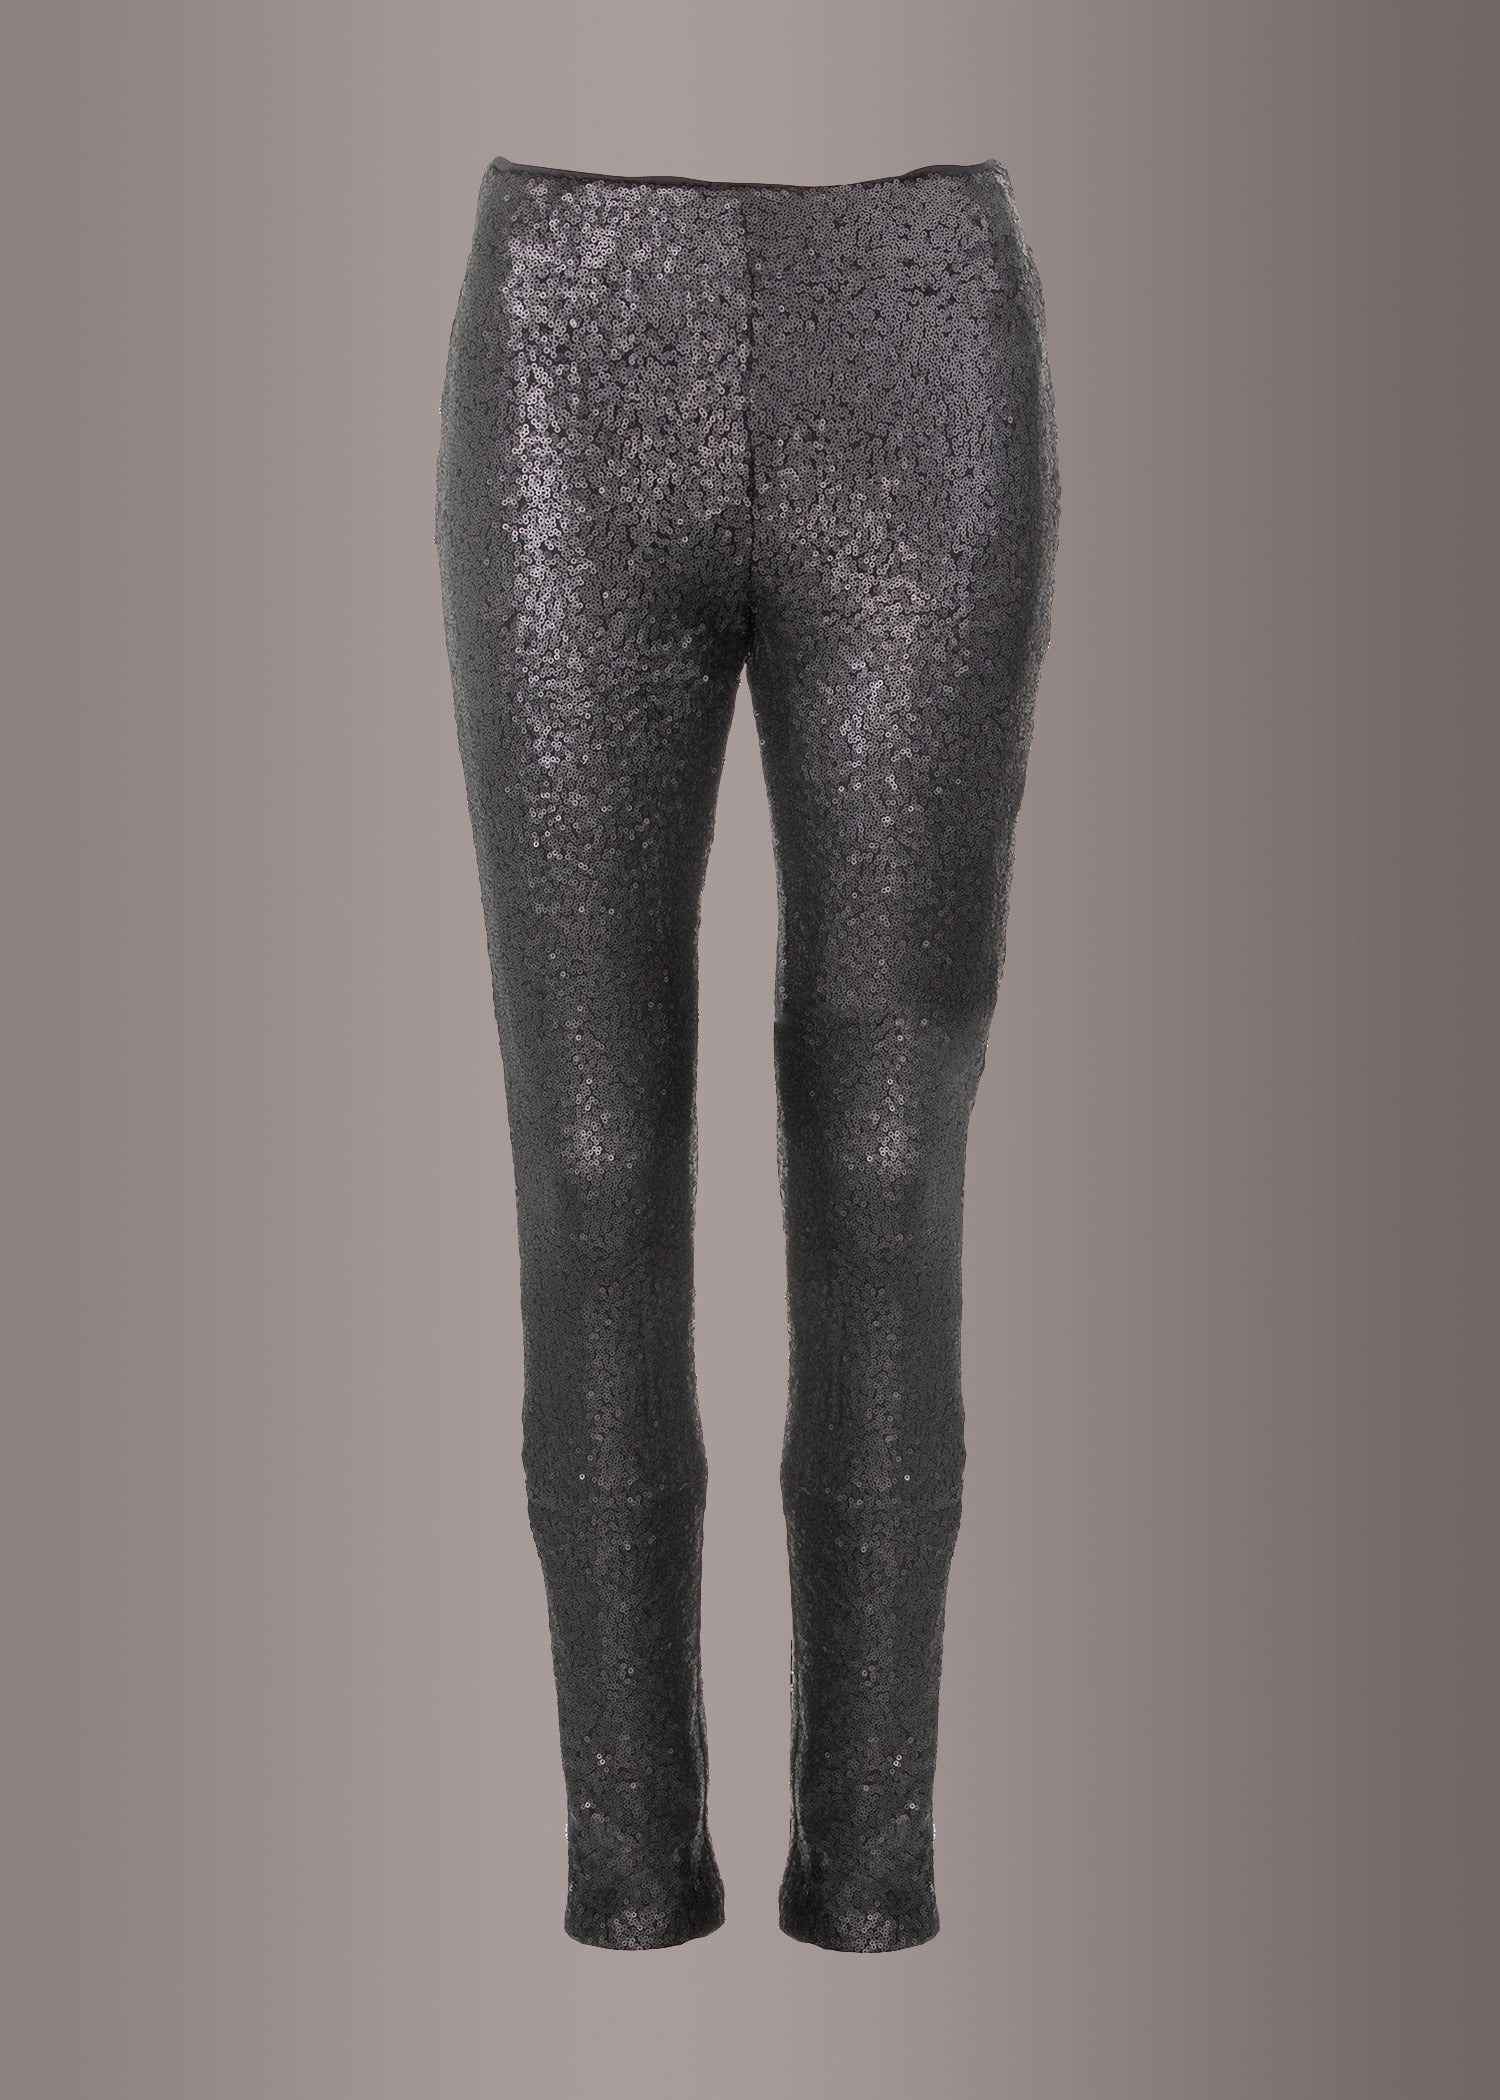 Shop Black Sequin Leggings, Glitter Pants